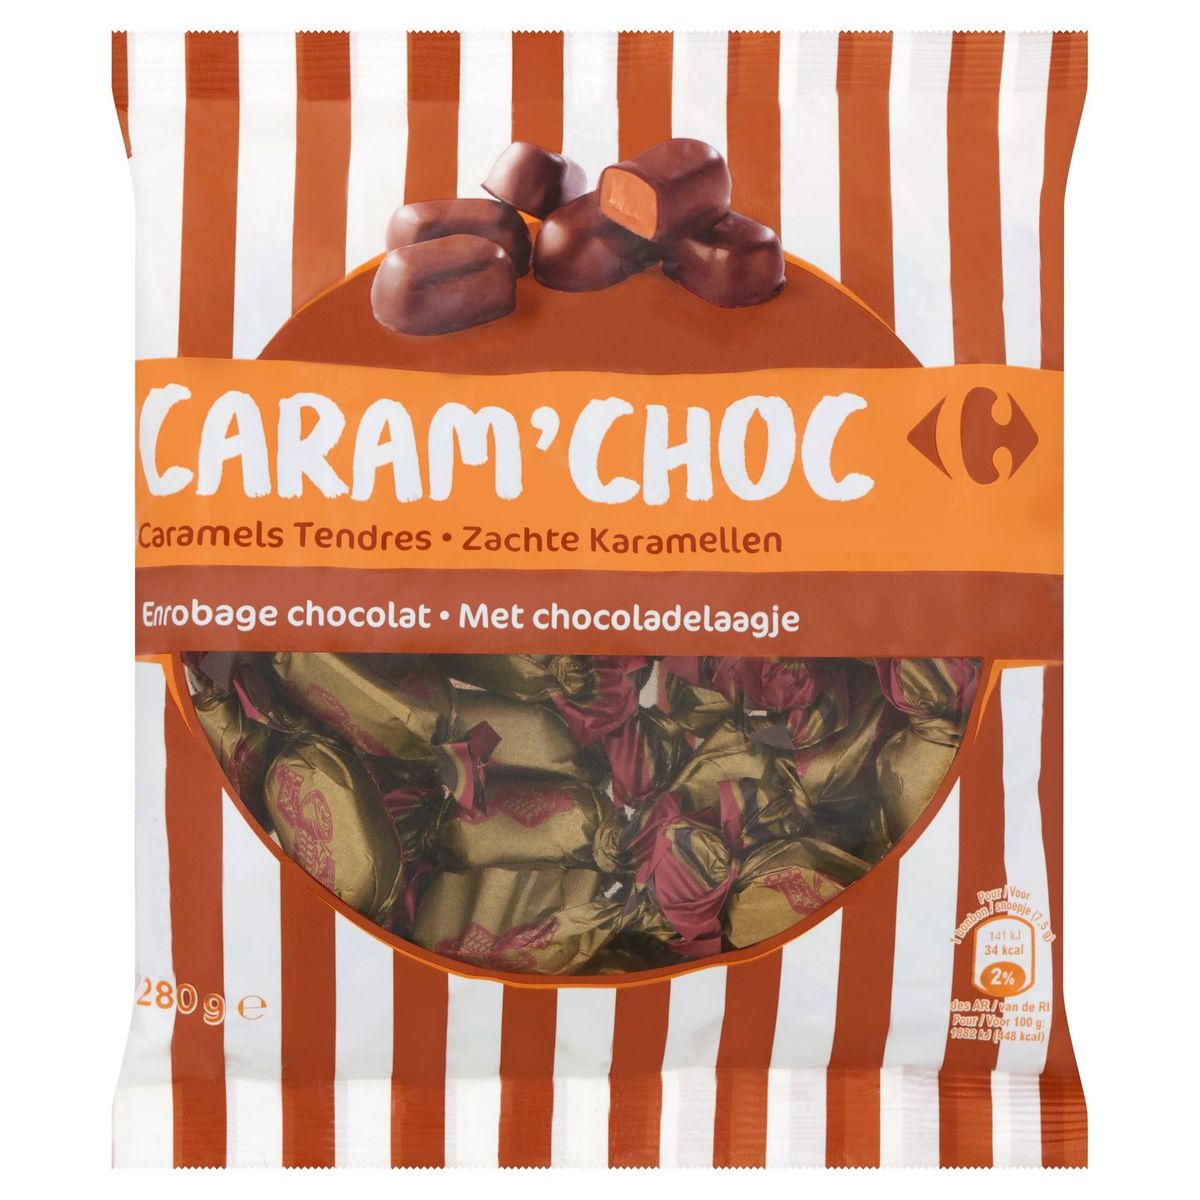 Carrefour Caram' Choc Zachte Karamellen met Chocoladelaagje 280 g